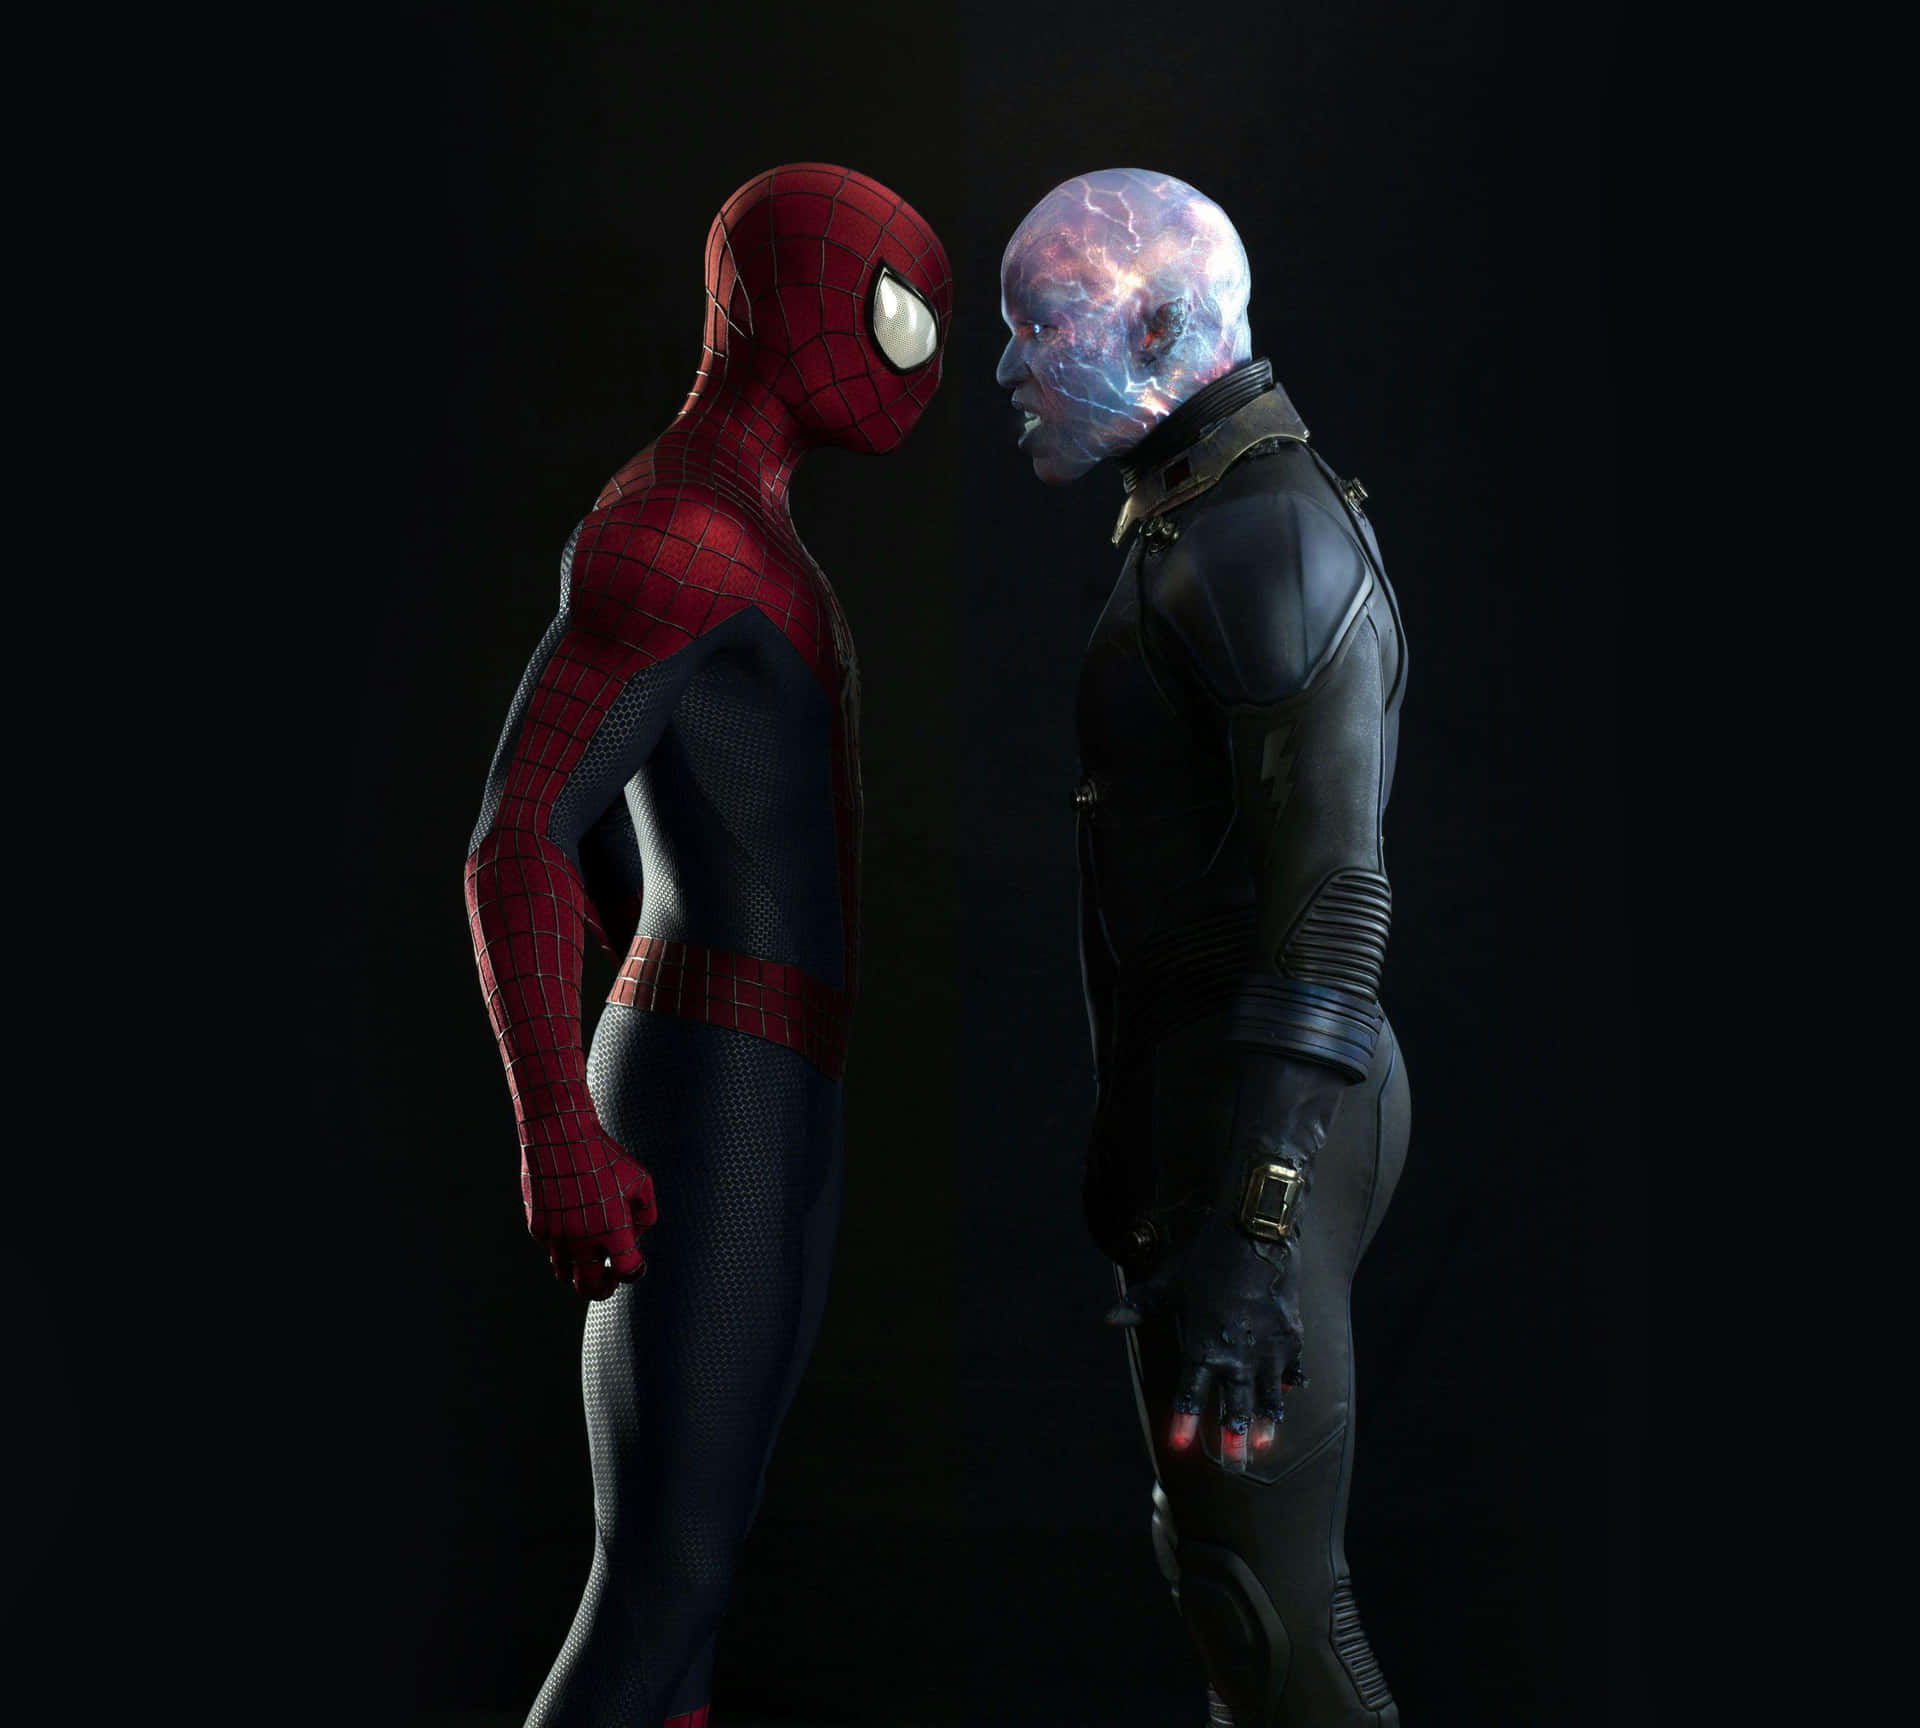 Spiderman 2 - Saving the Day Wallpaper